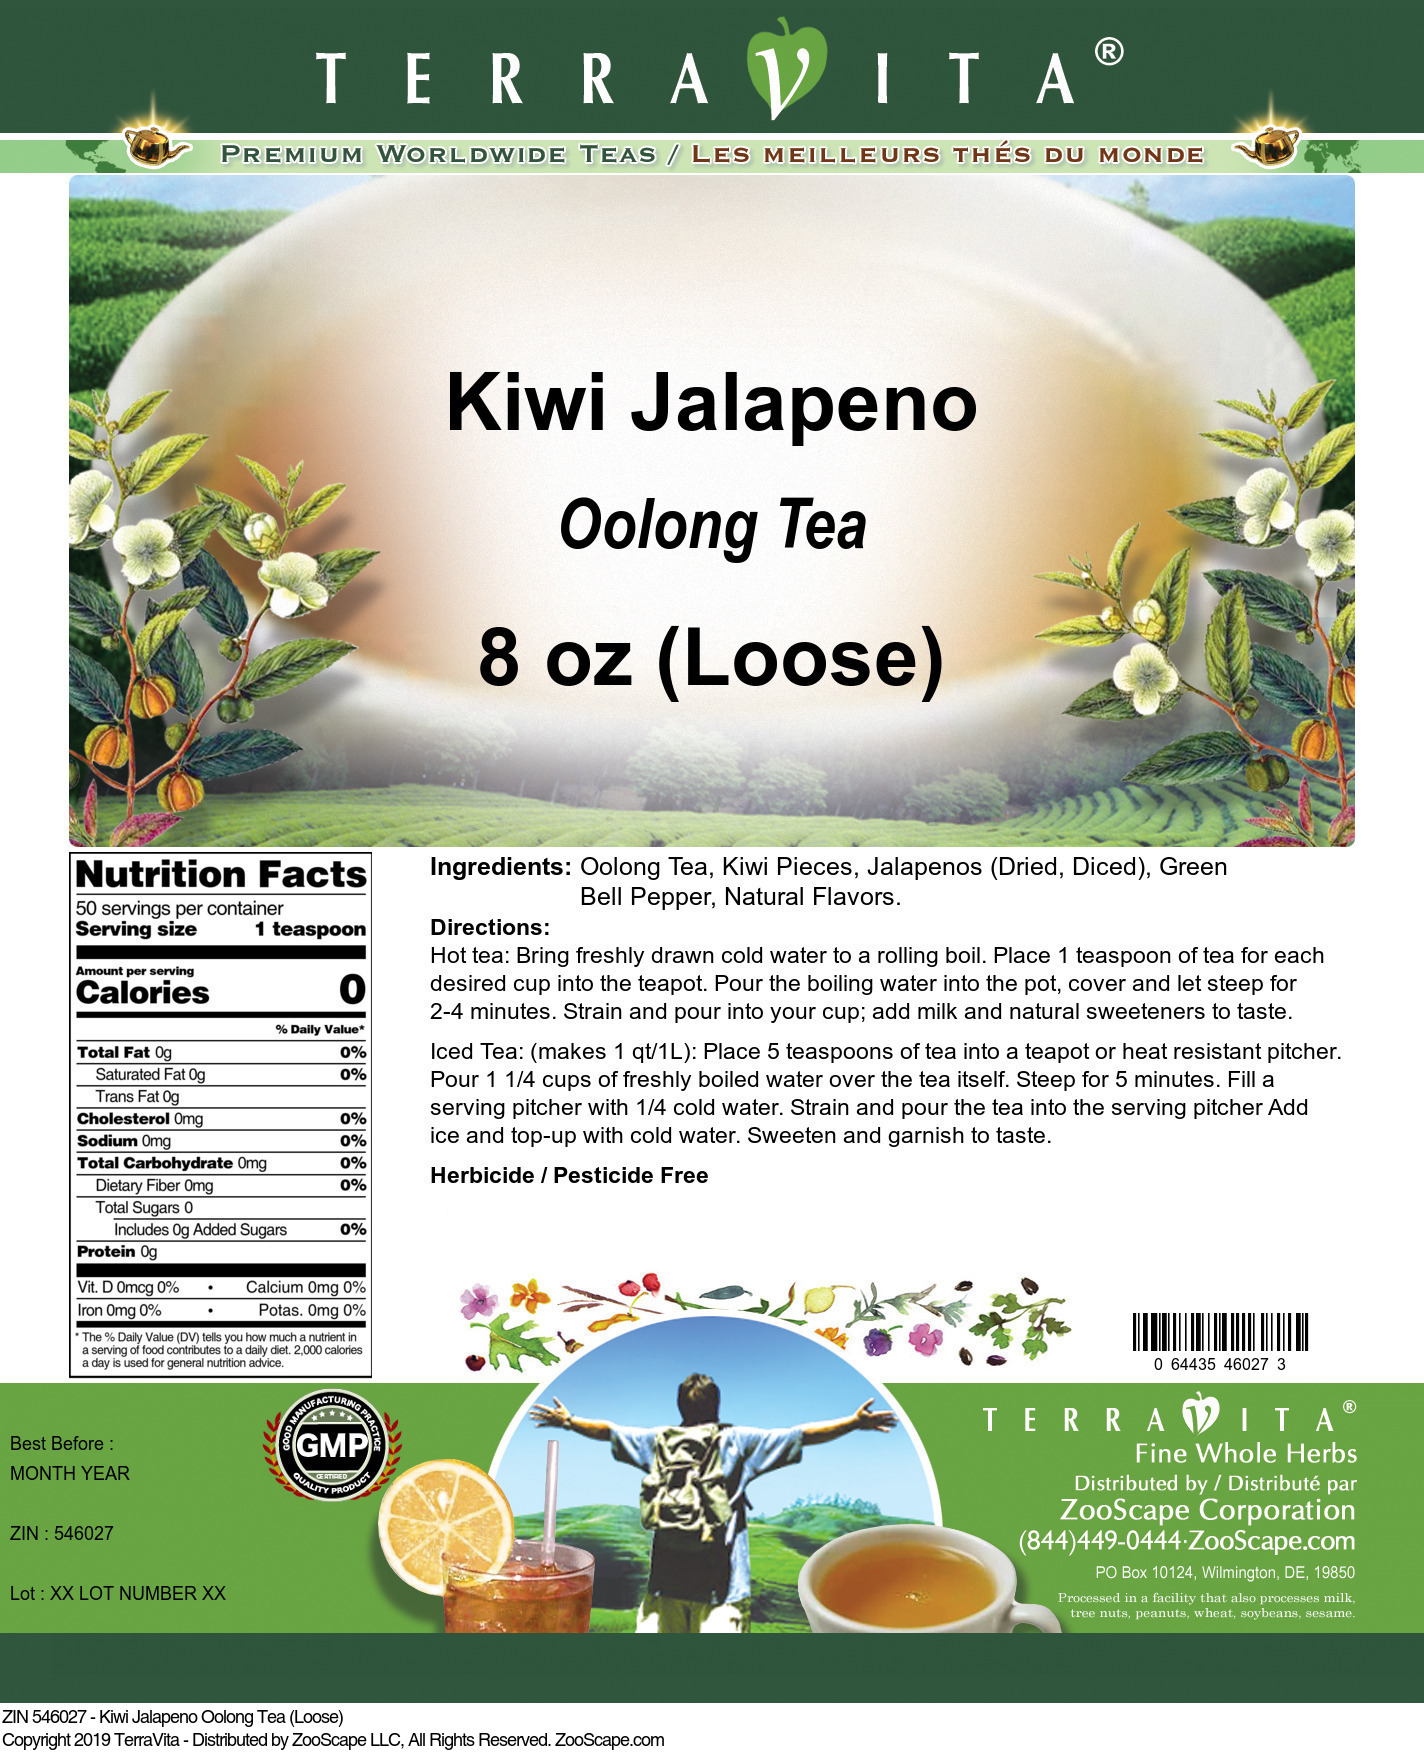 Kiwi Jalapeno Oolong Tea (Loose) - Label